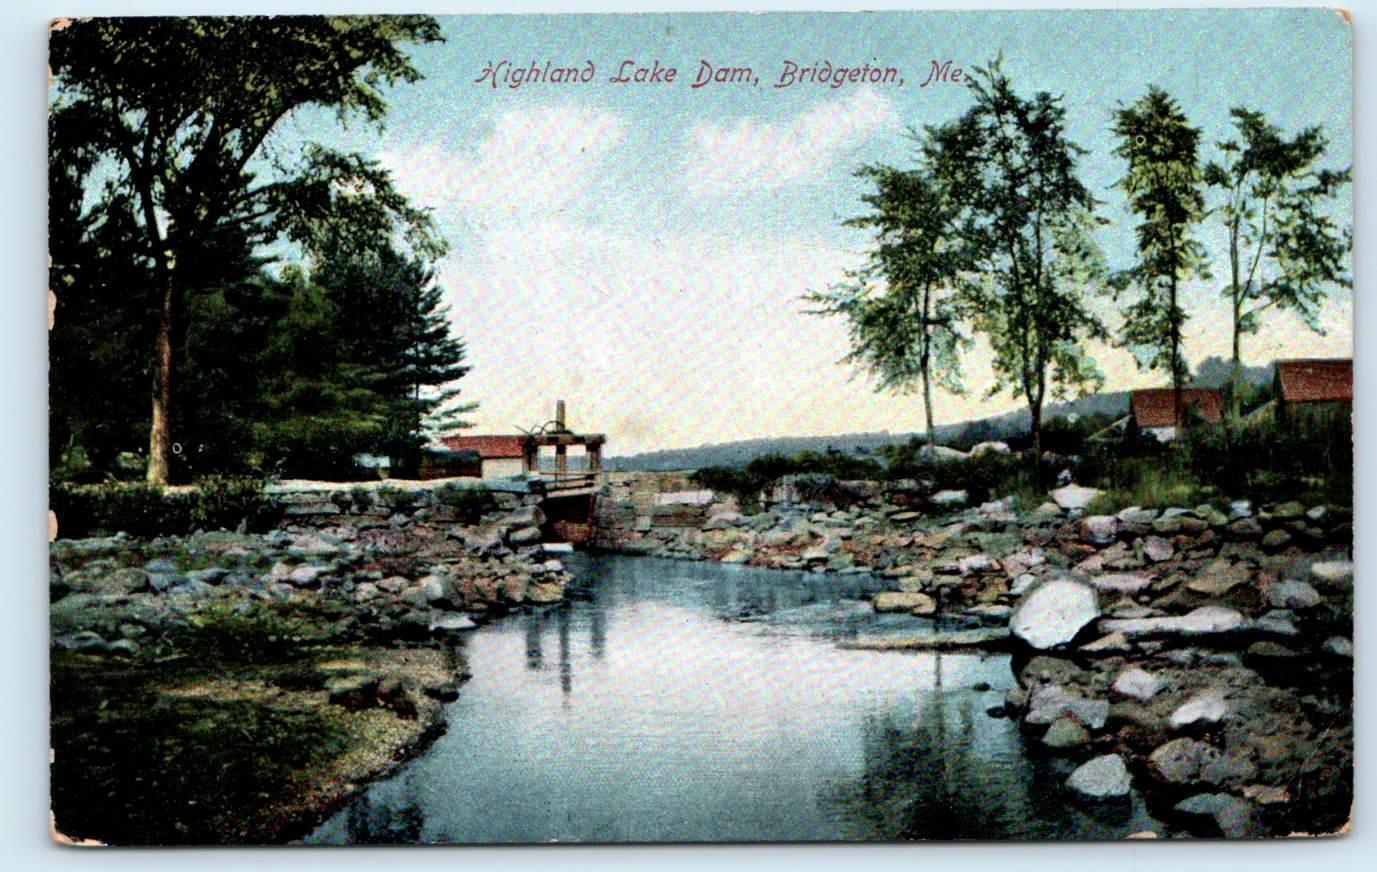 BRIDGETON, ME Maine ~ HIGHLAND LAKE DAM c1900s Cumberland County Postcard